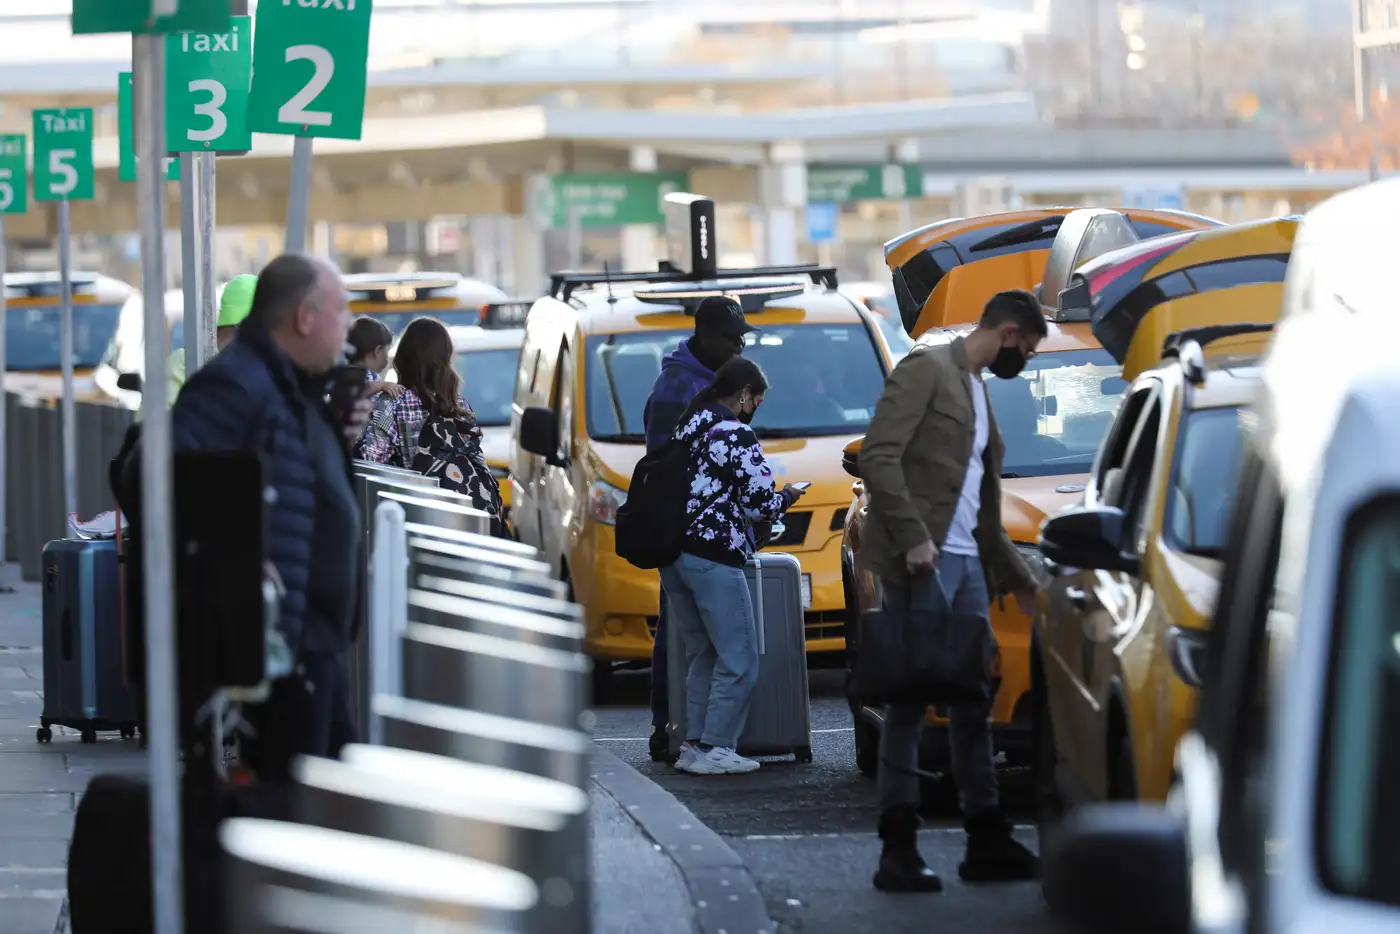 He took a taxi. Фотографии из аэропорта. Таксист. Такси хаки. Нью Йорк 2021.